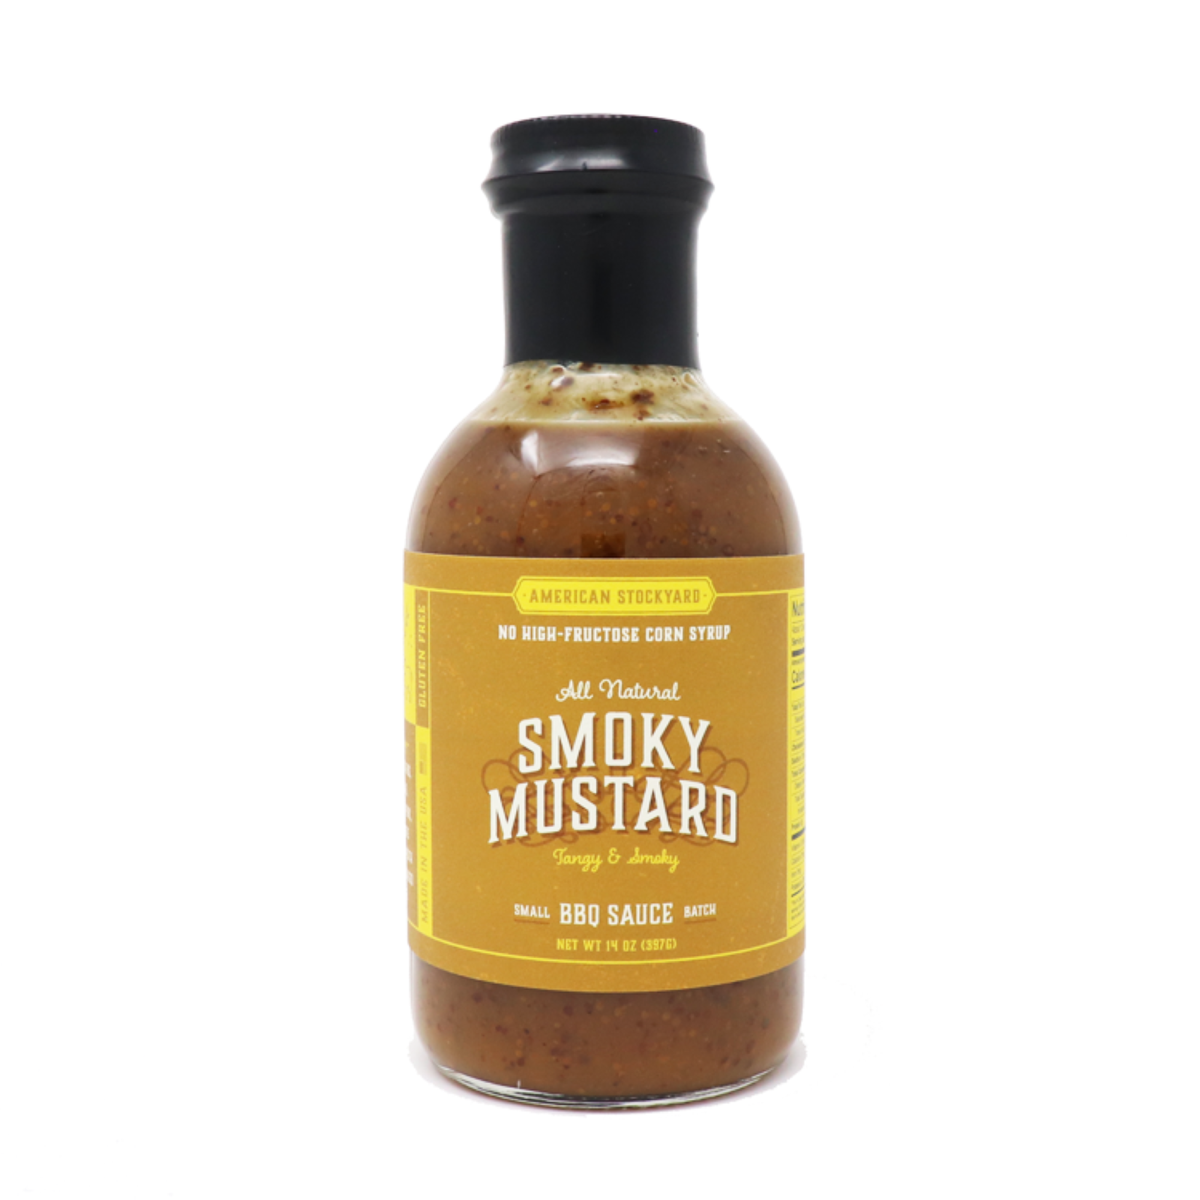 American Stockyard BBQ Sauce Smoky Mustard - La senape affumicata per eccellenza